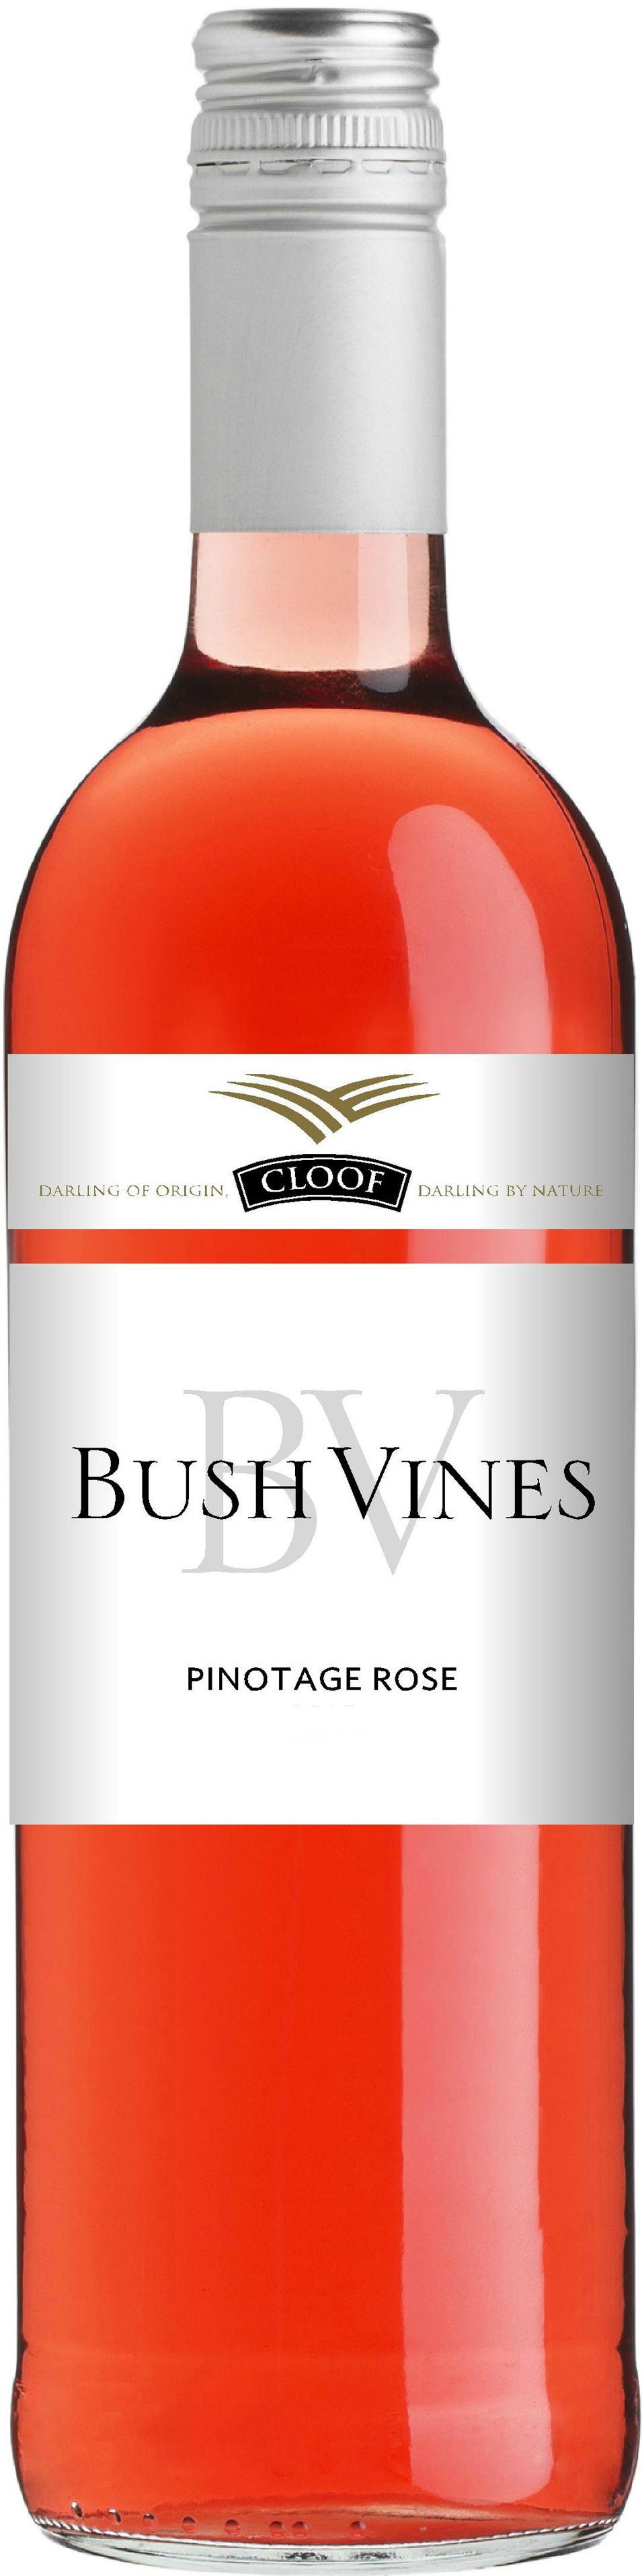 Cloof, Bush Vines Pinotage Rose, 2018